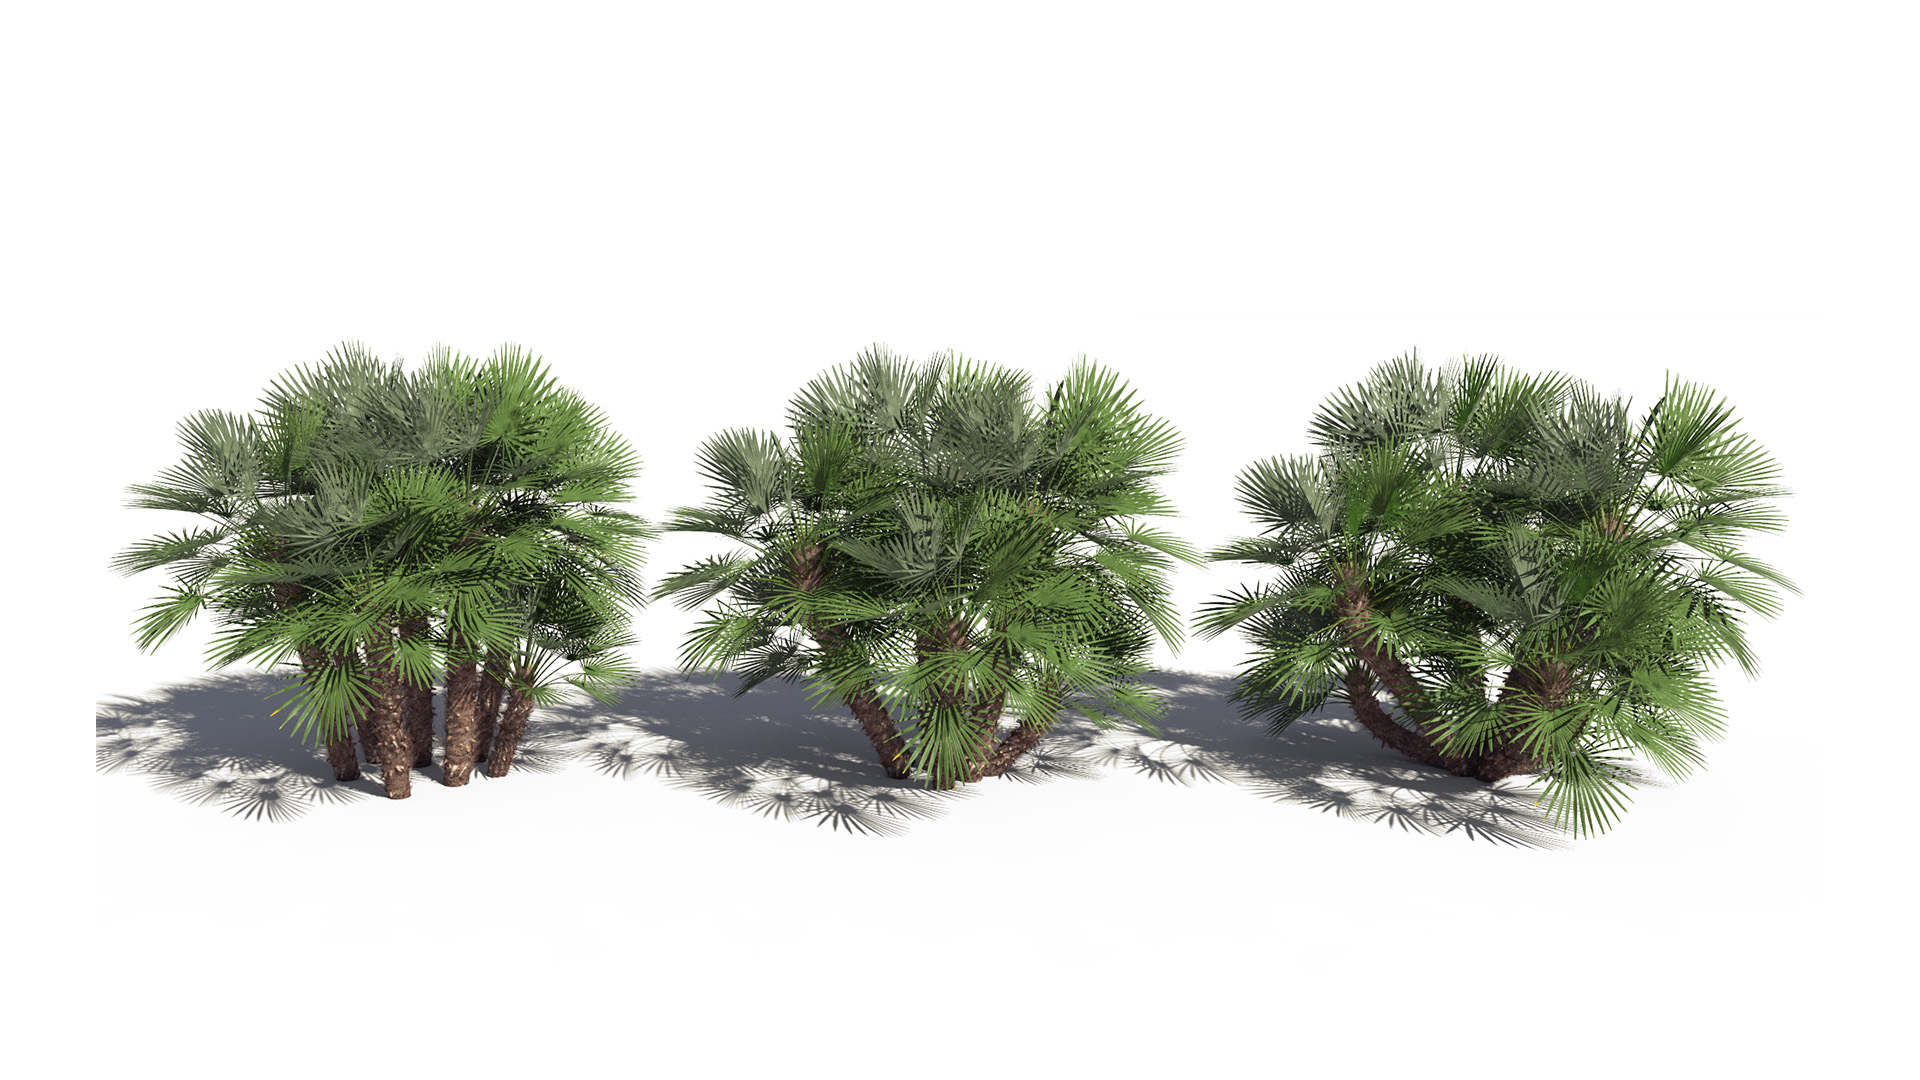 3D model of the Mediterranean fan palm Chamaerops humilis